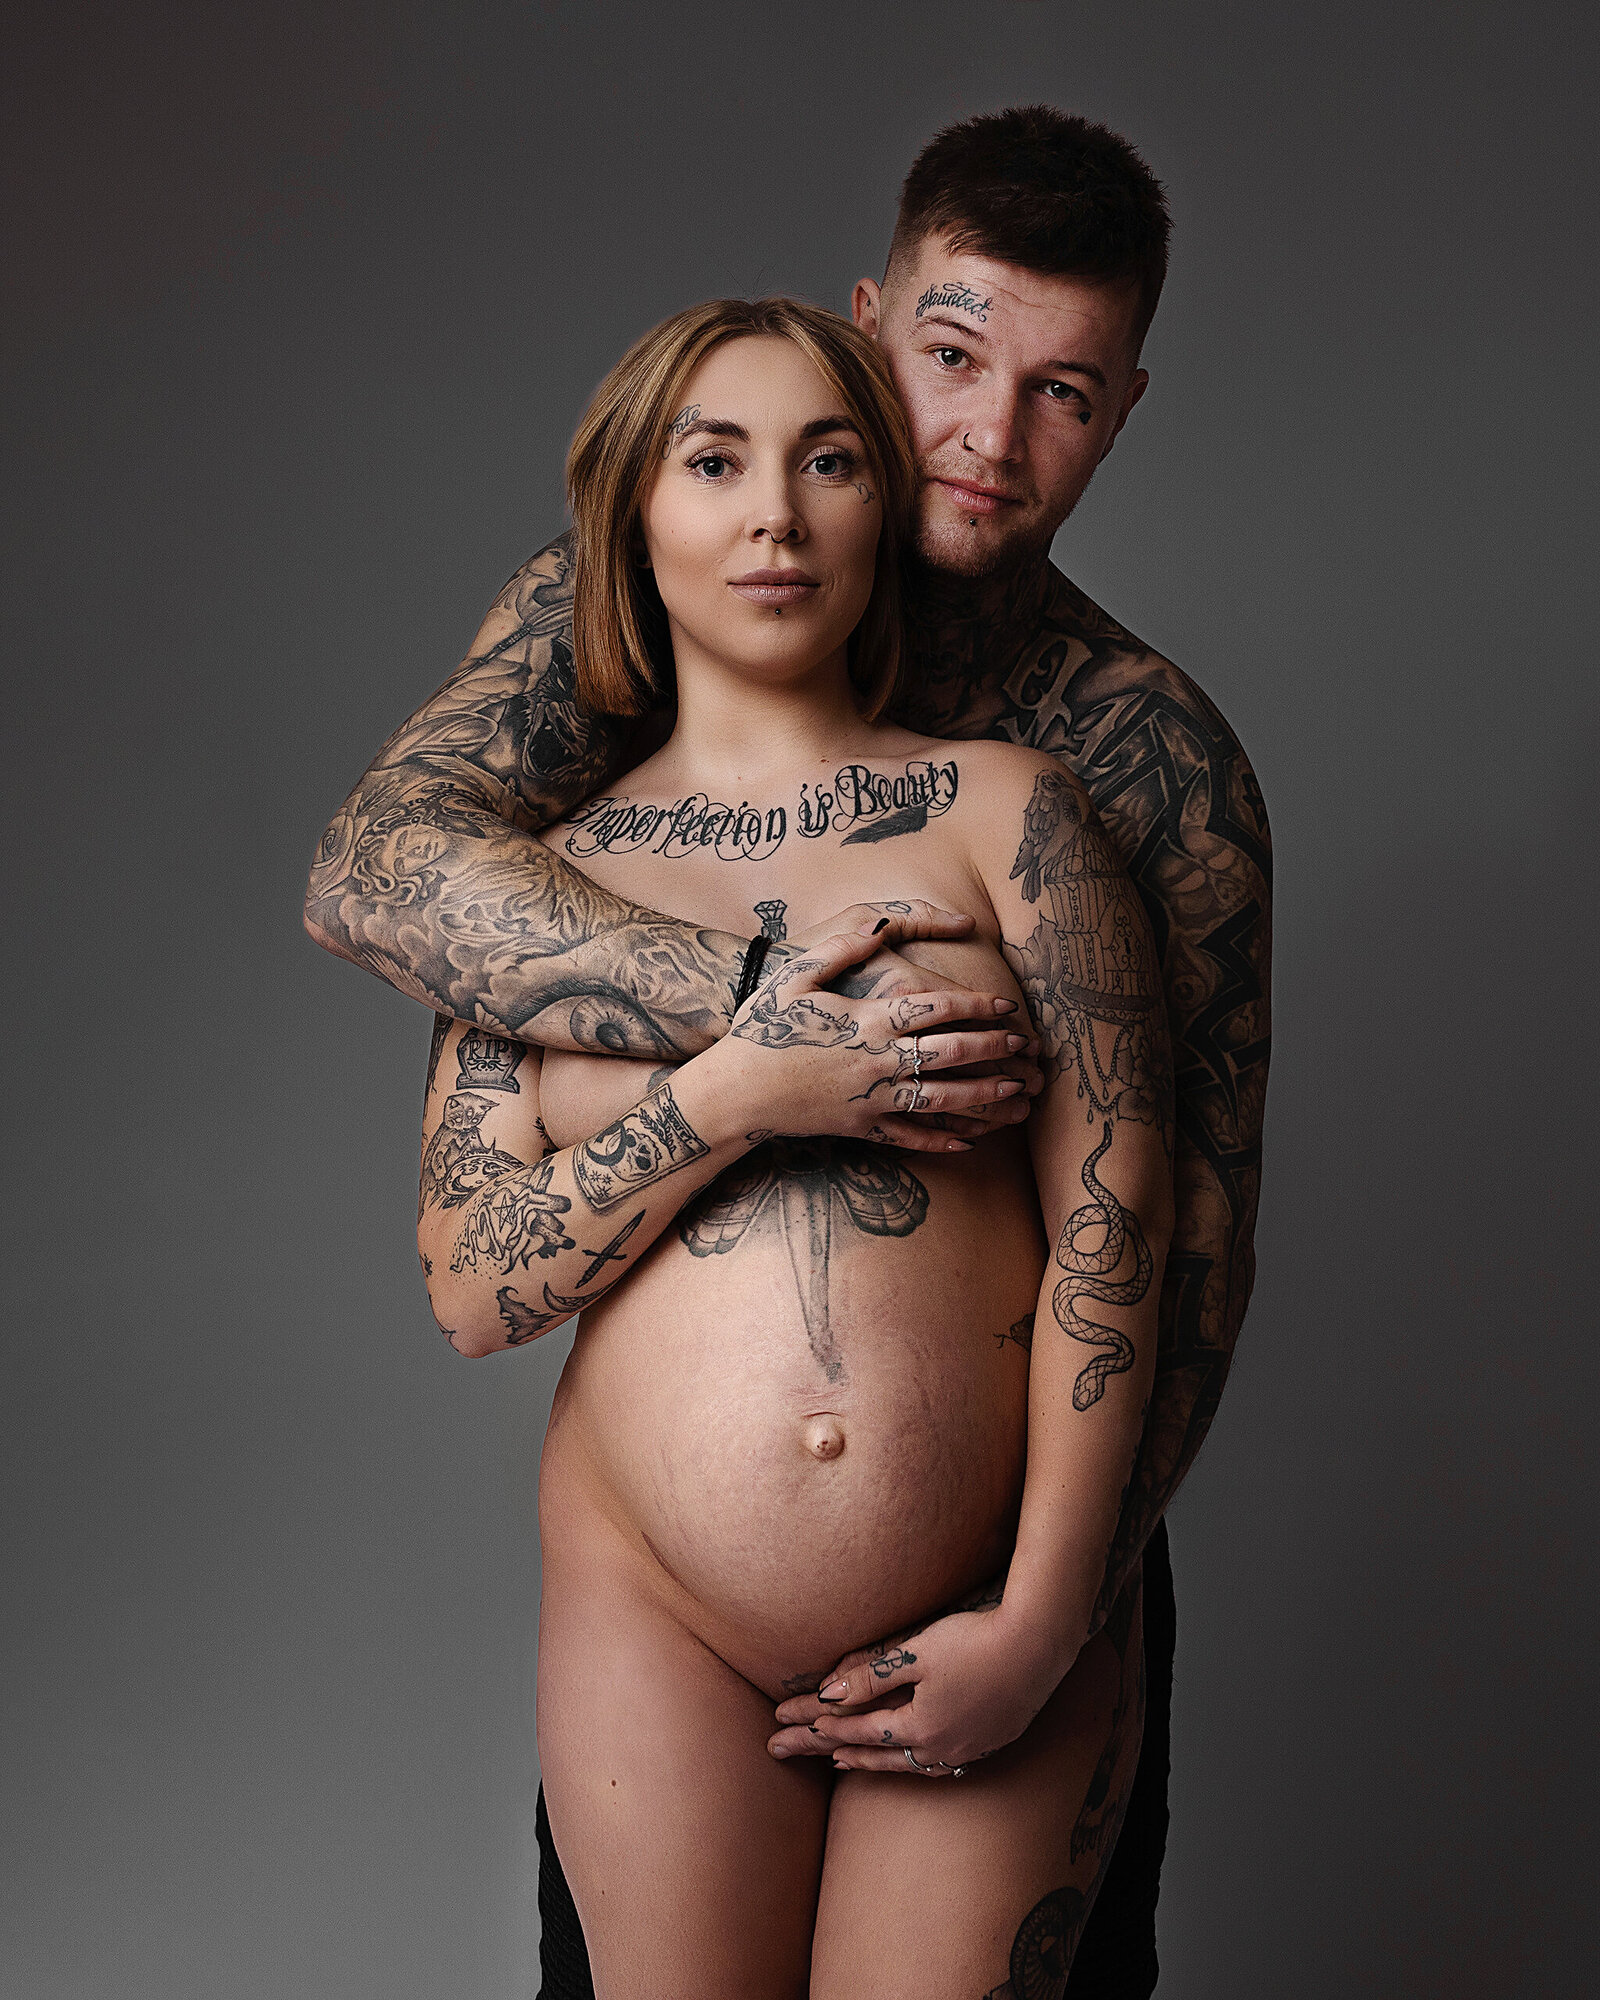 naked nude tattoo maternity pregnant woman andrea b photography llanelli neath cardiff